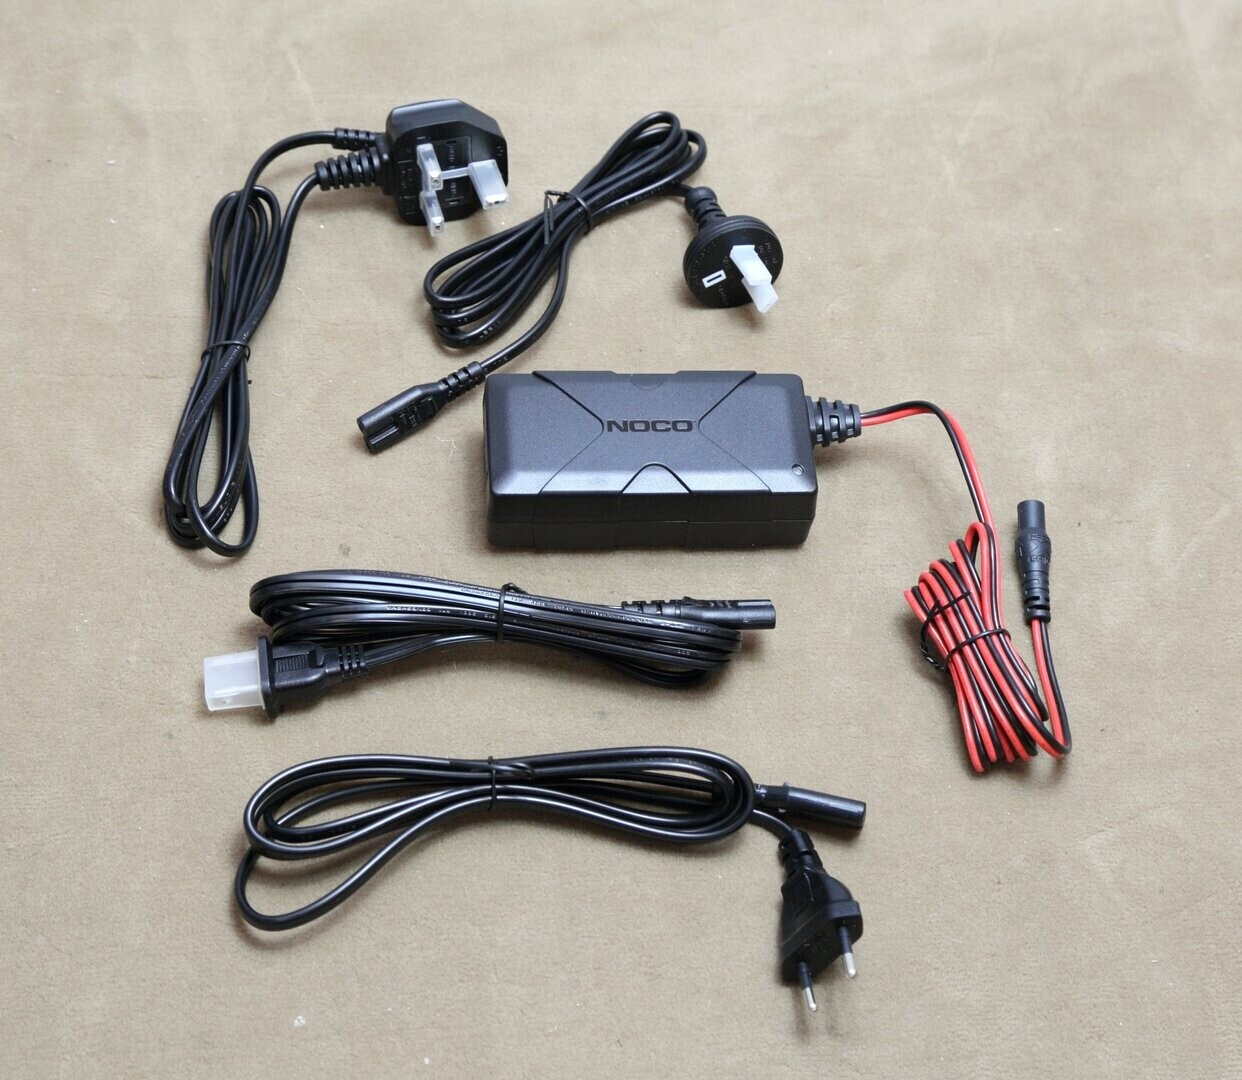 14v Ac/dc Adapter For Noco Xgc4 56w Xgc Genius Boost Hd Gb70 Pro Gb150  Boostpro